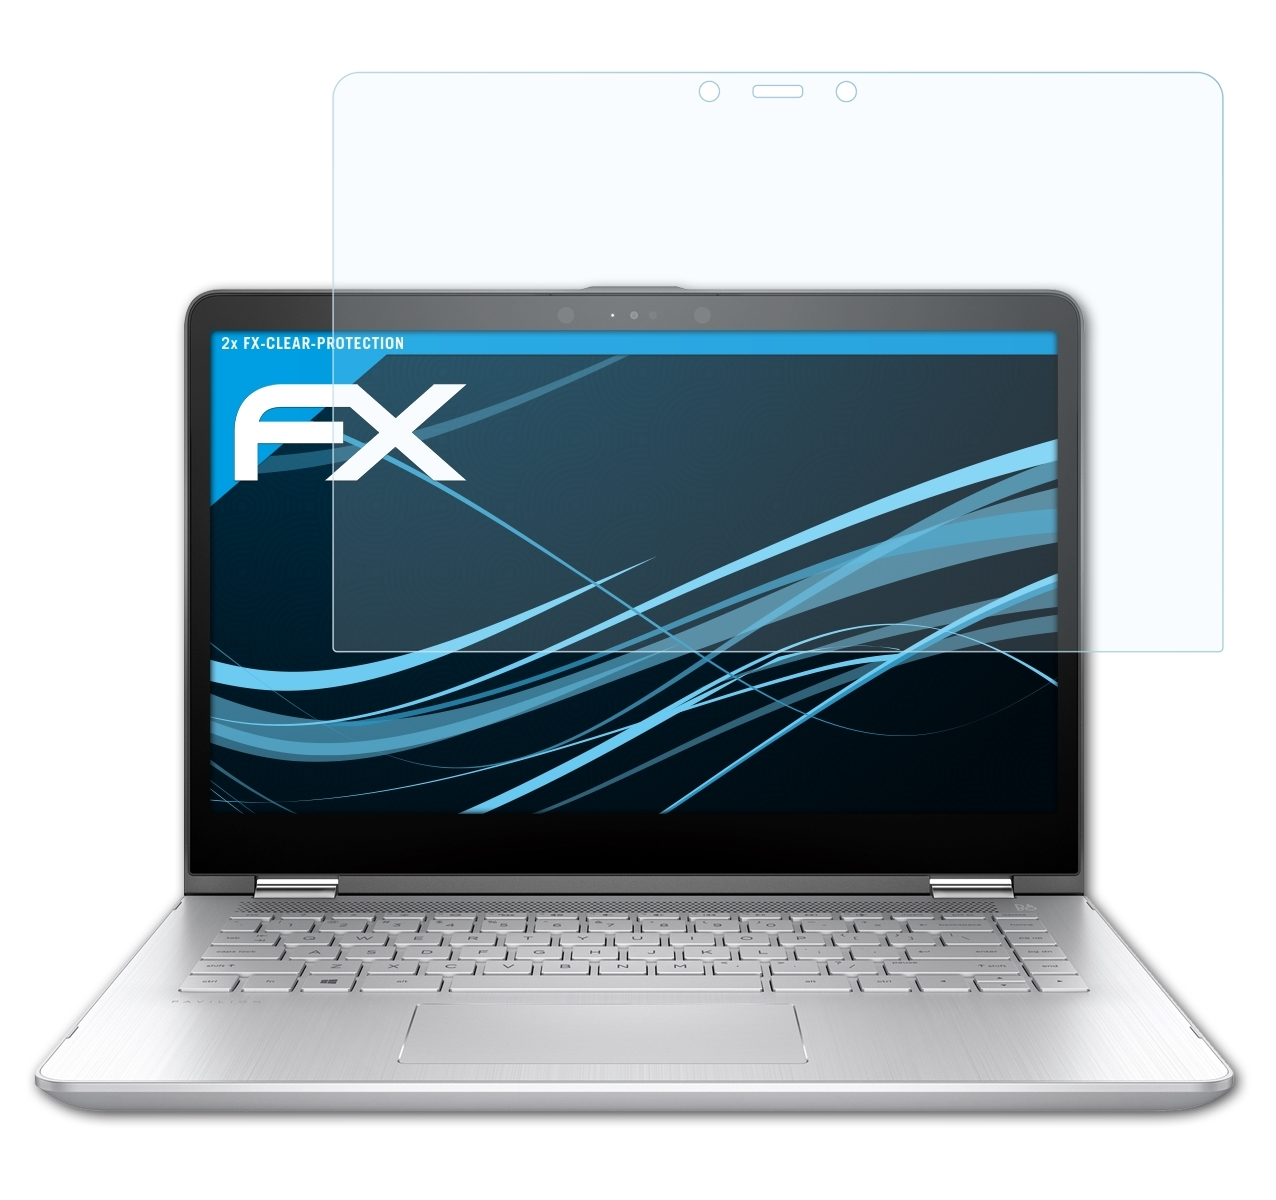 ATFOLIX 2x FX-Clear Displayschutz(für HP Pavilion x360 14-ba019ng)